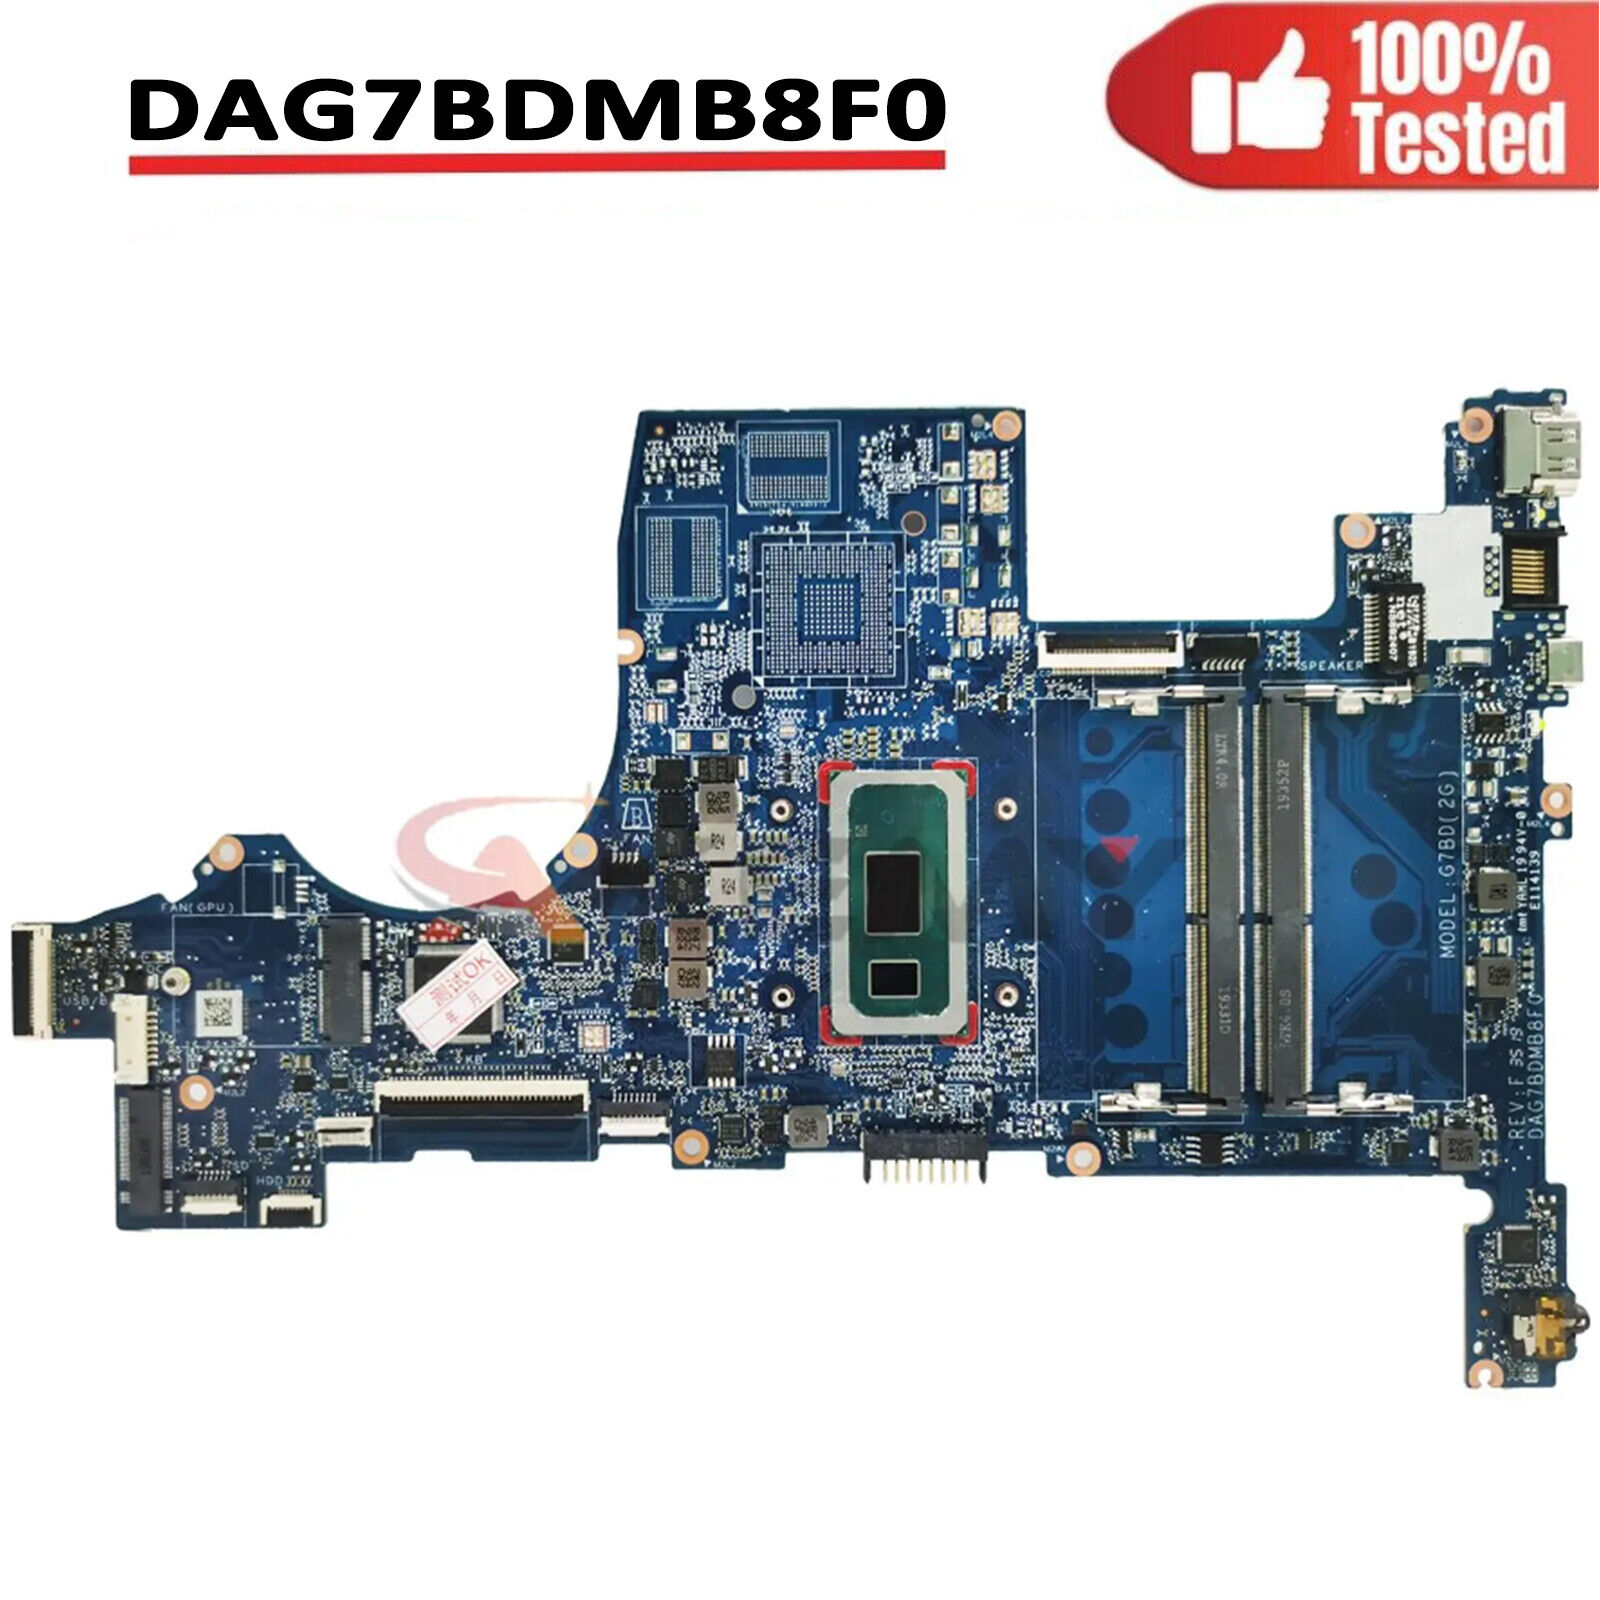 Dag7bdmb8f0 Laptop Mainboard For Hp 15t-cs 15-cs I3 I5 I7 8th Gen Cpu Uam Tested